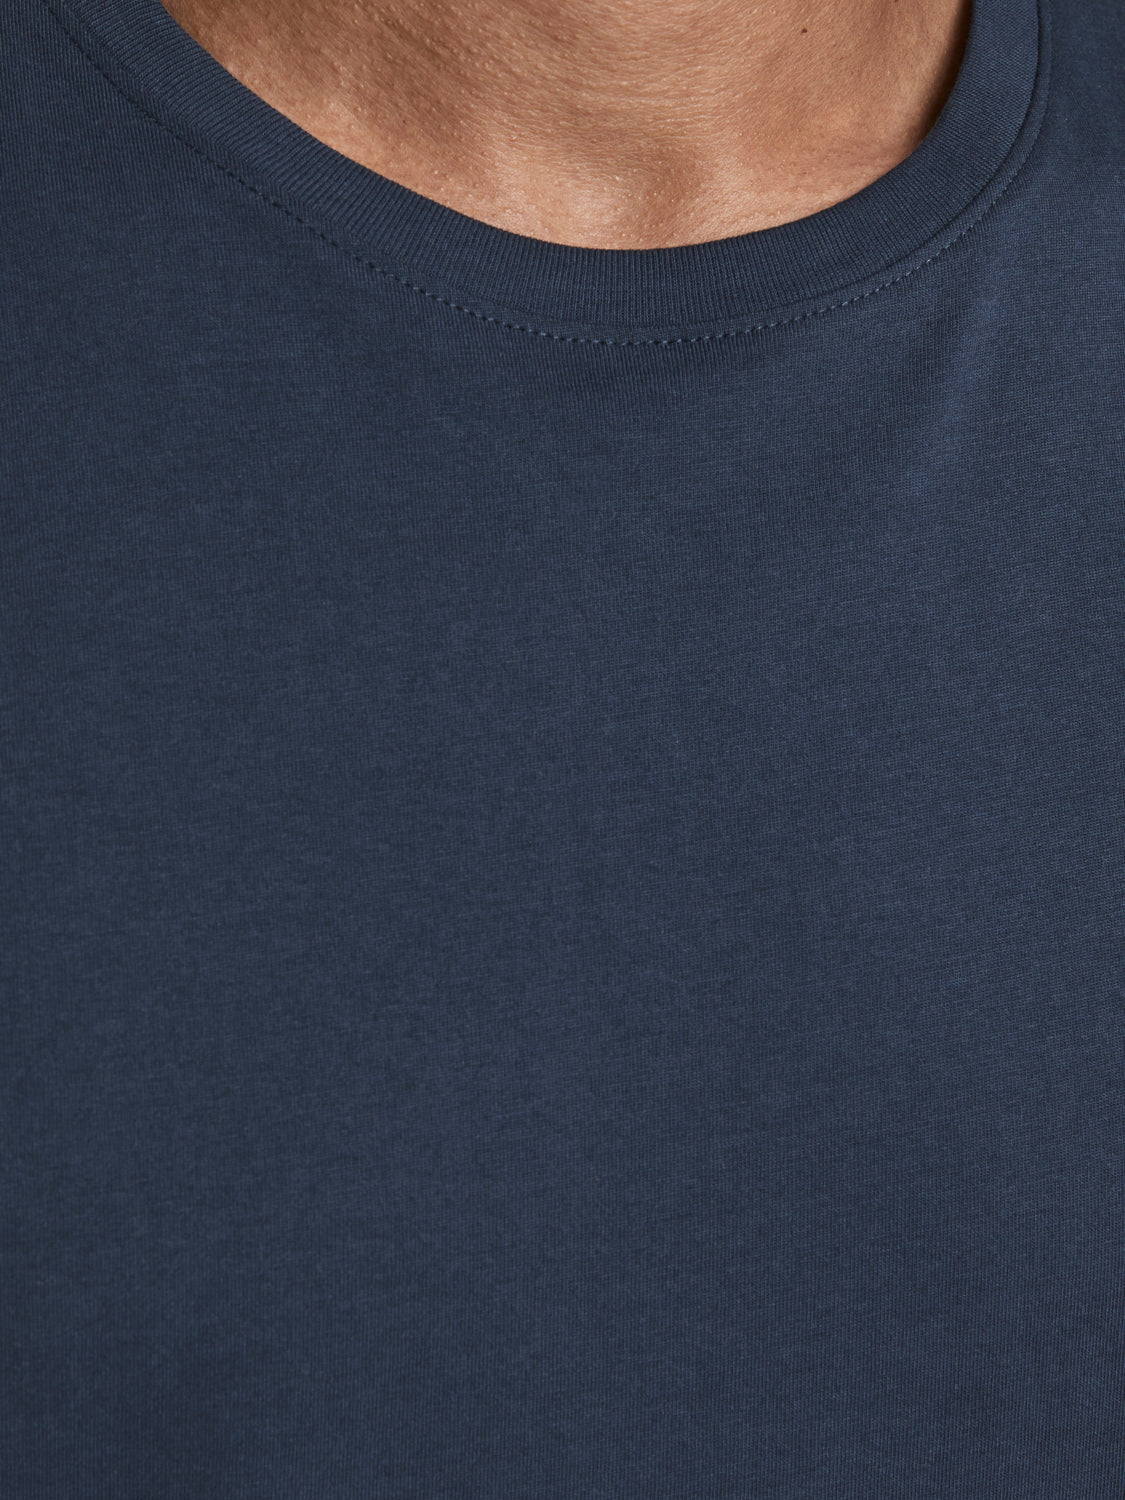 JJEORGANIC T-shirt - navy blazer